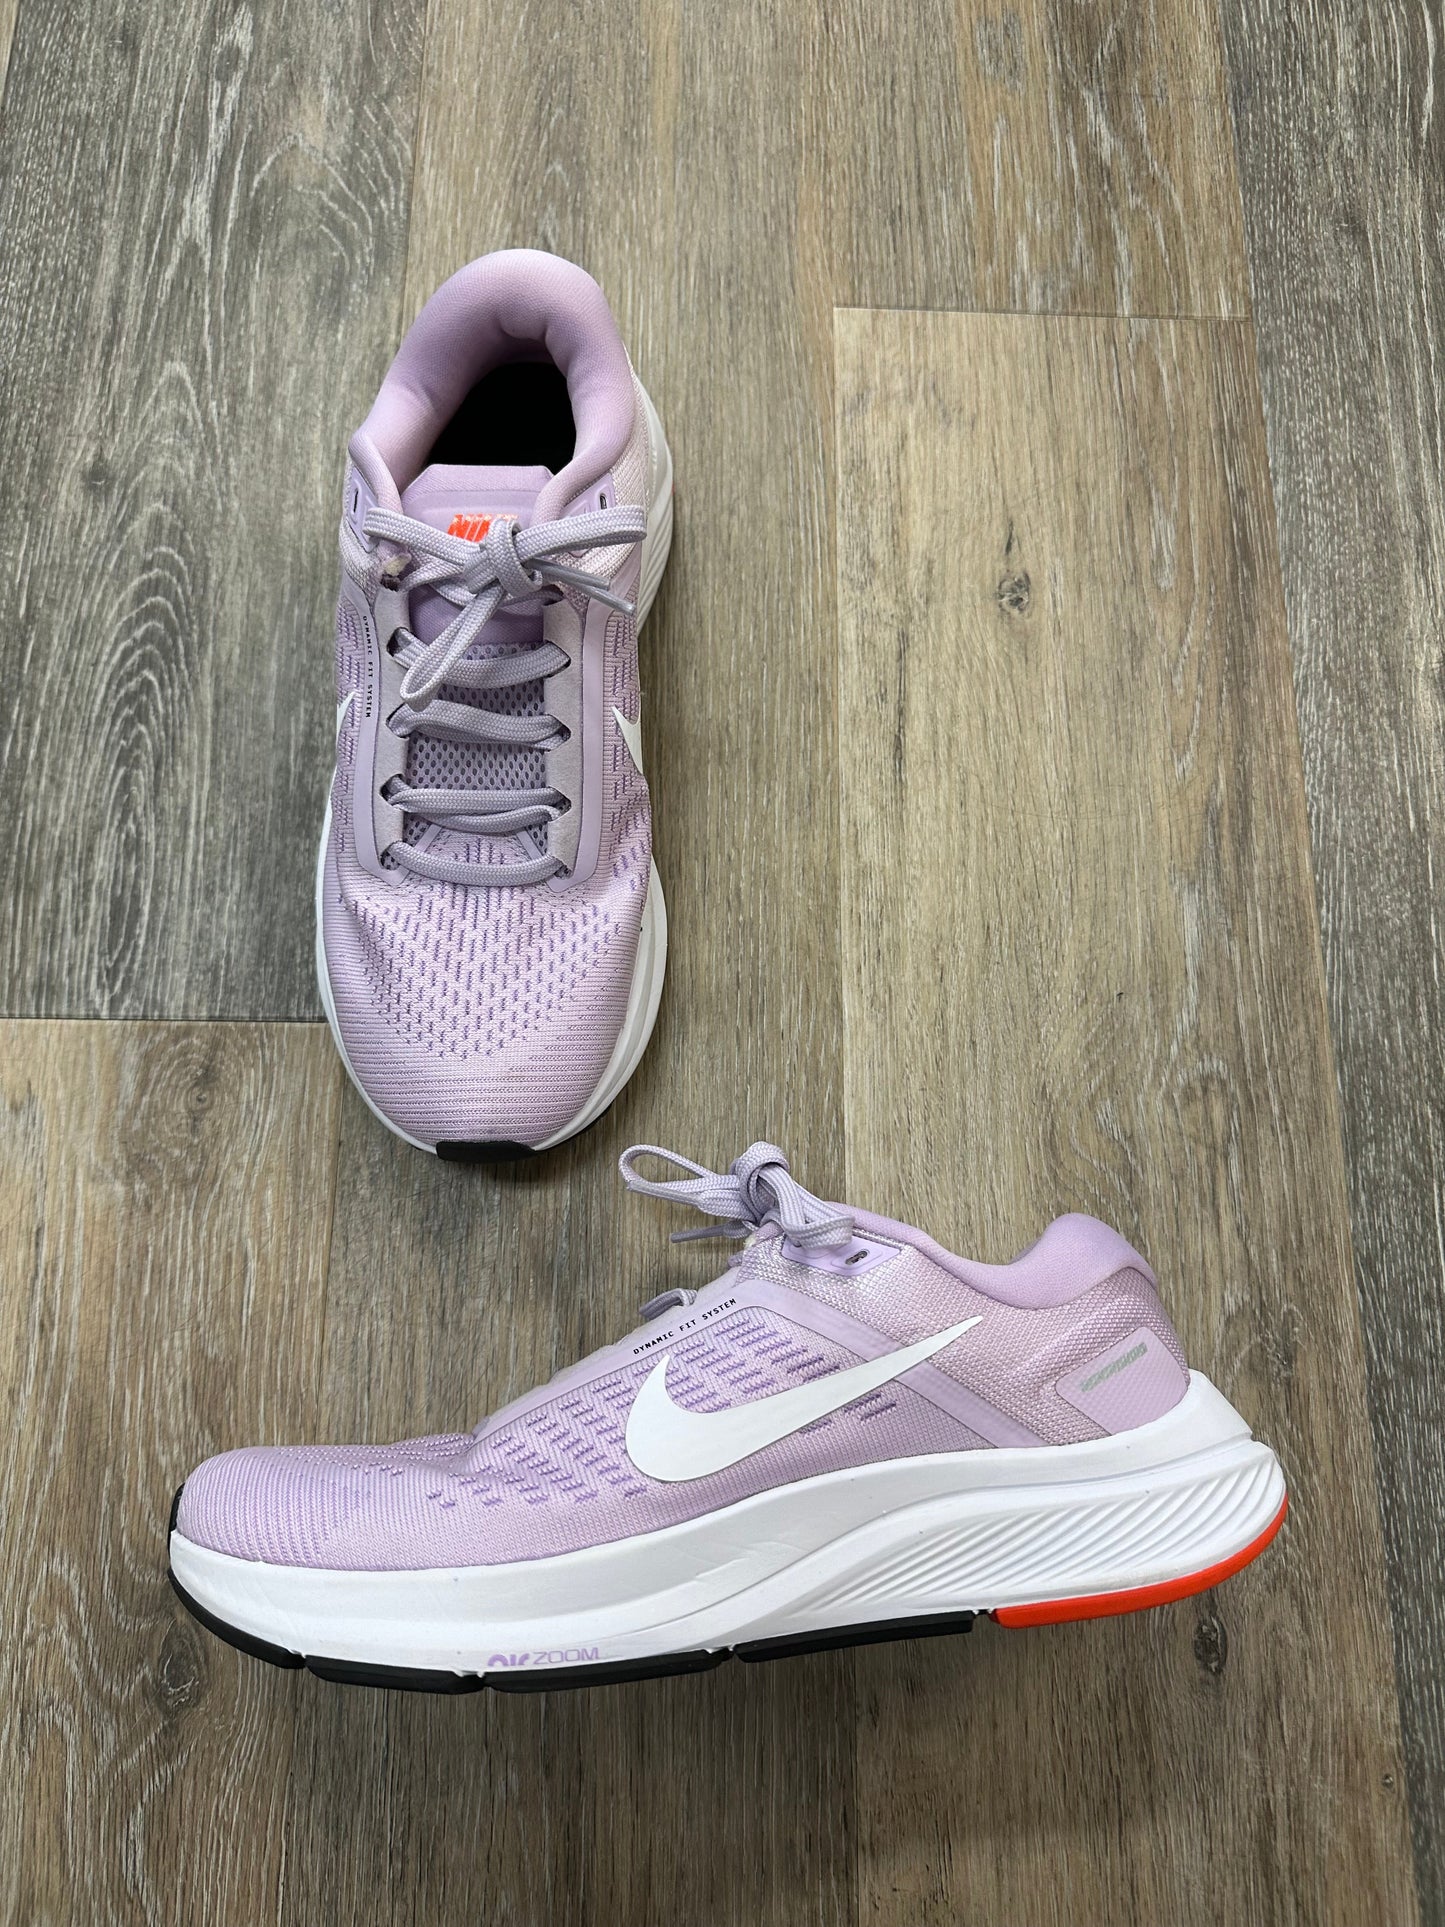 Purple Shoes Athletic Nike, Size 7.5